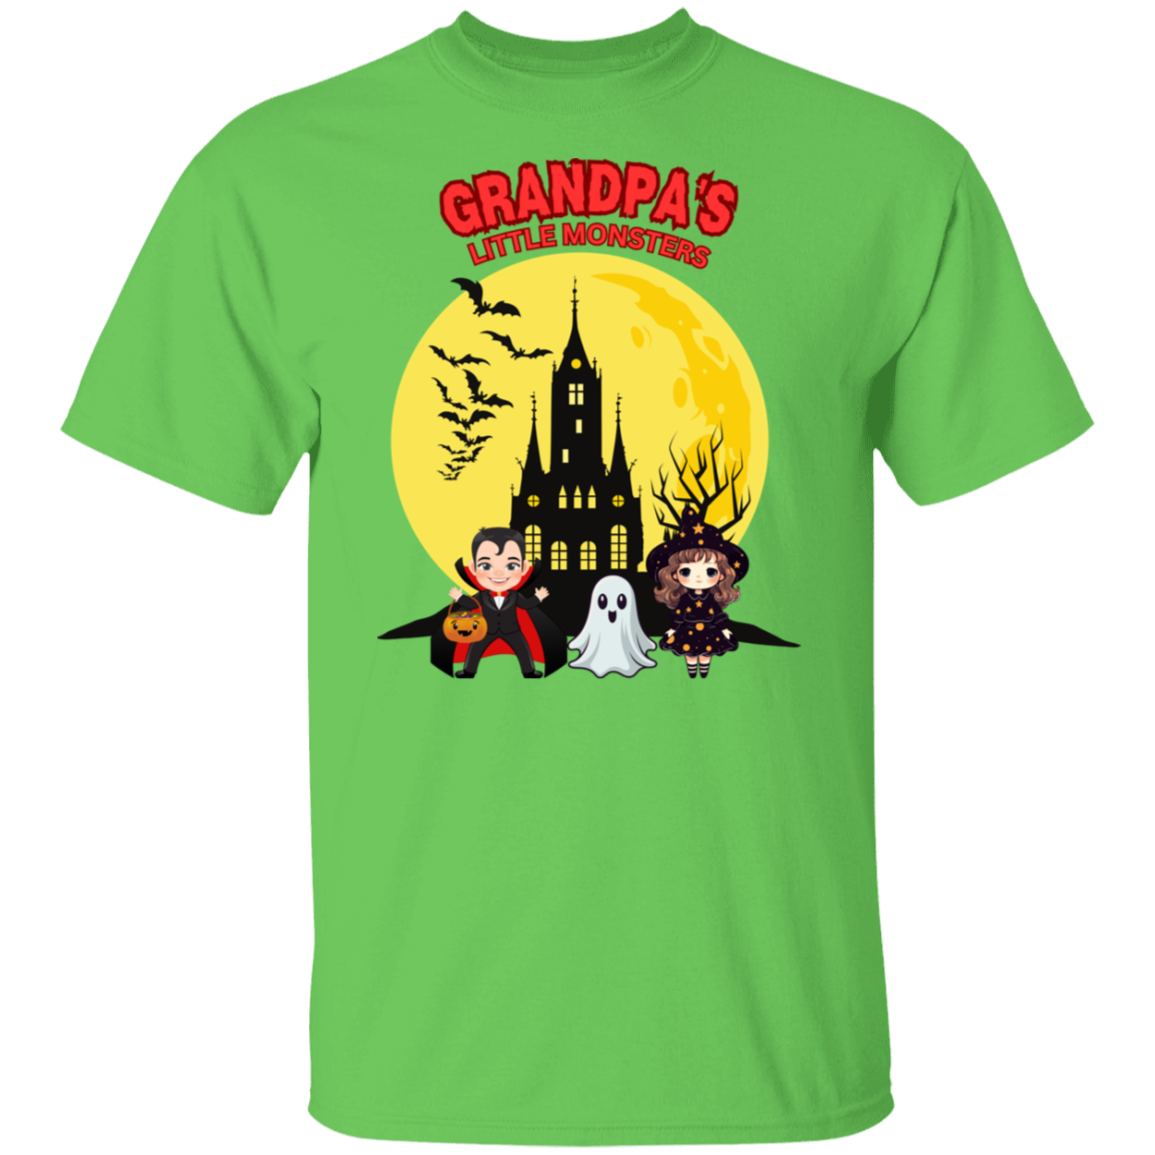 Grandpa's Little Monsters T-Shirt